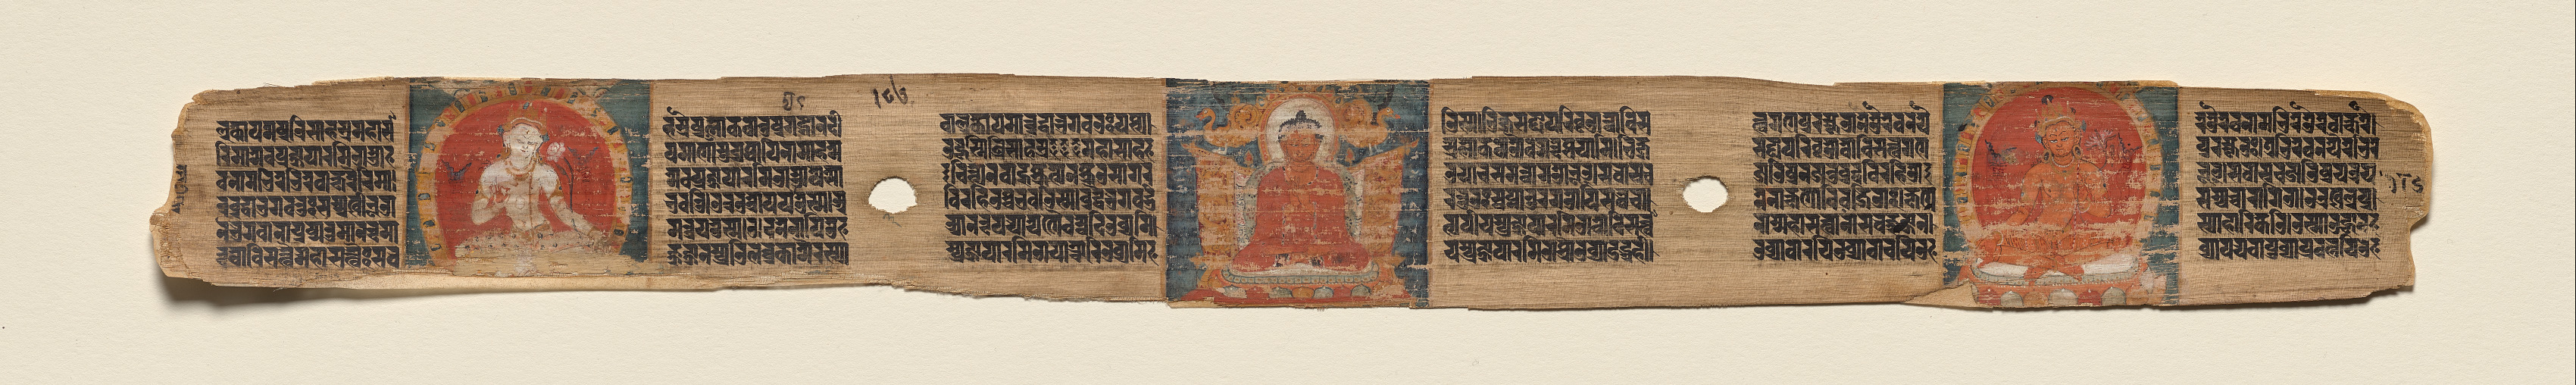 Preaching Amitabha with Avalokiteshvara and Manjushri, folio 186 (verso), from a Manuscript of the Perfection of Wisdom in Eight Thousand Lines (Ashtasahasrika Prajnaparamita-sutra)